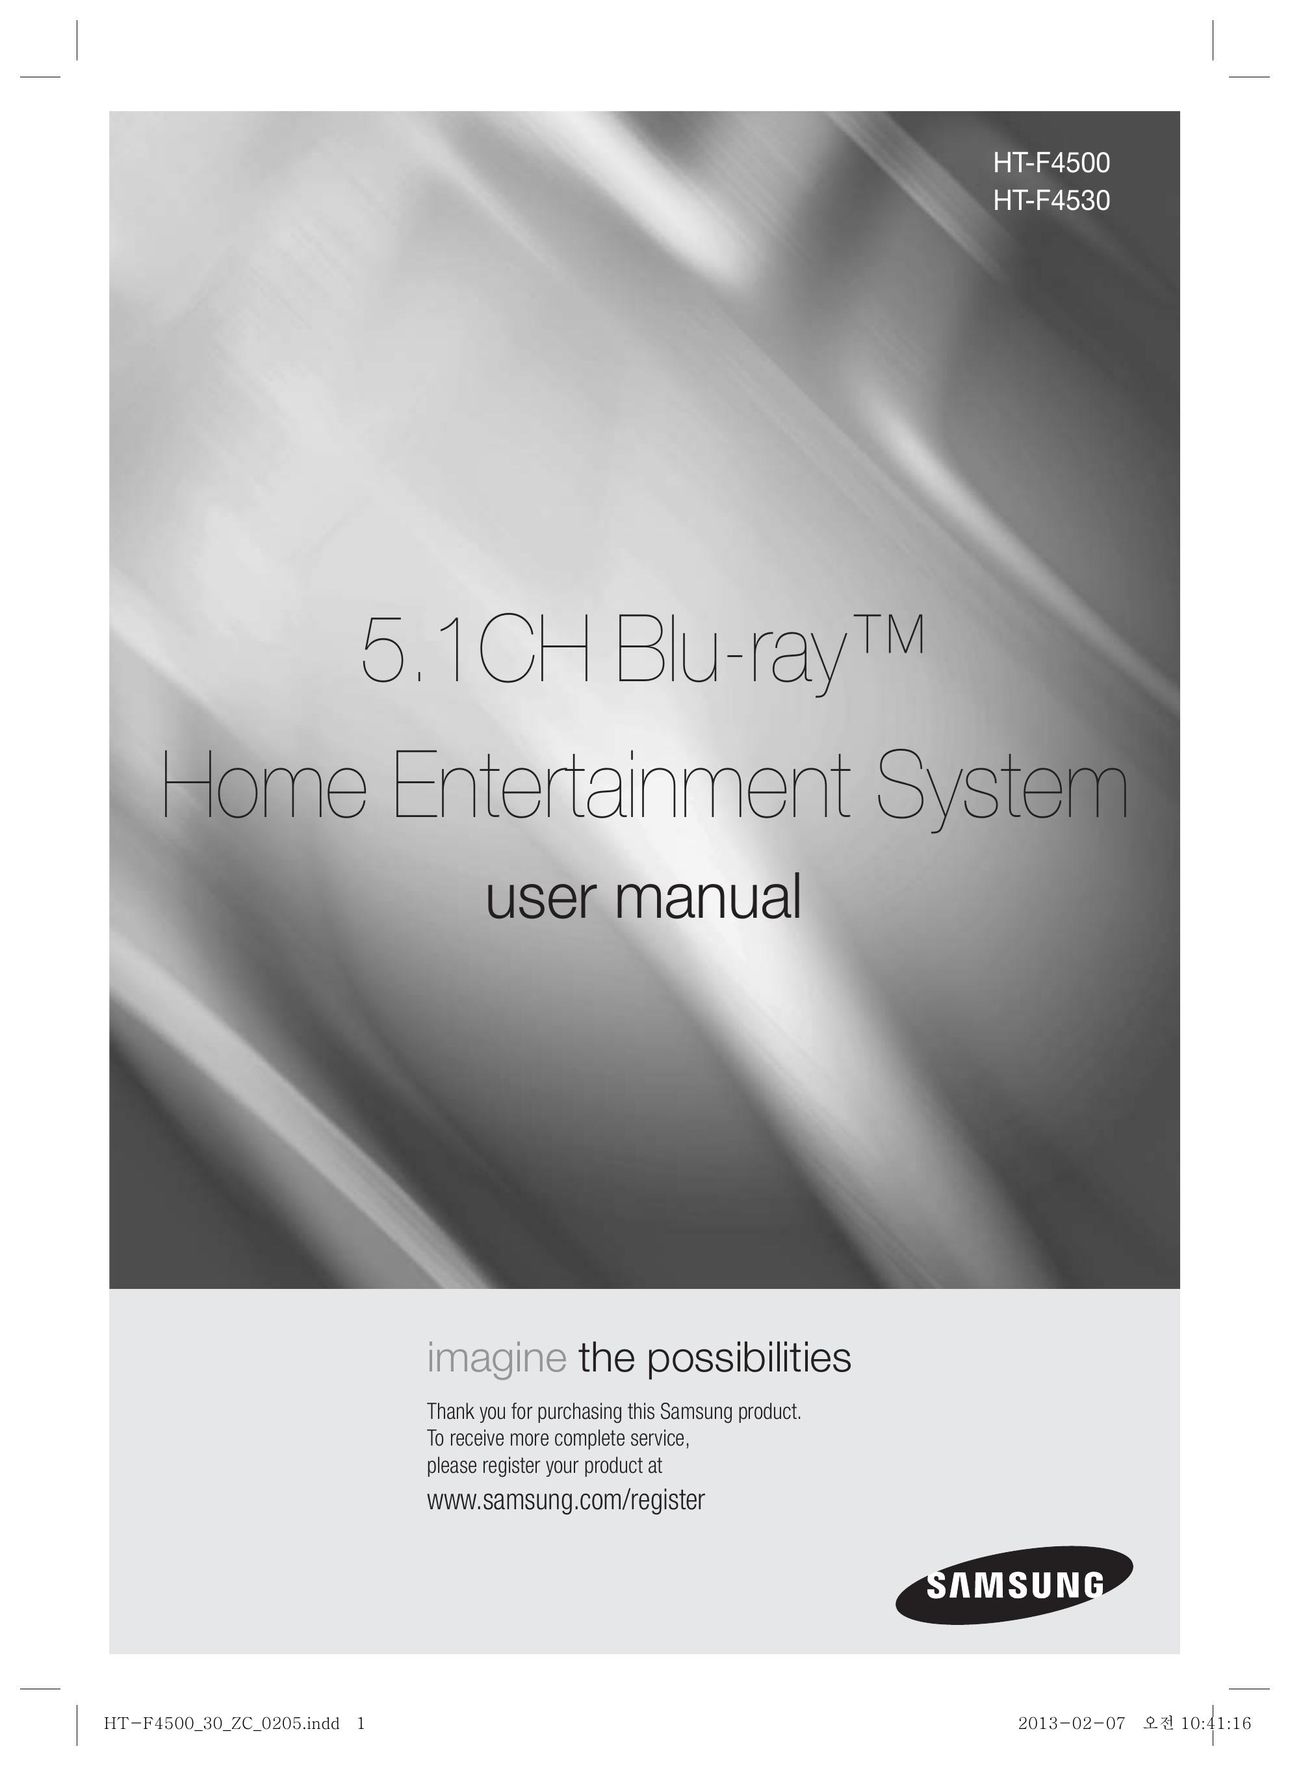 Samsung 51CH Blu-ray Player User Manual